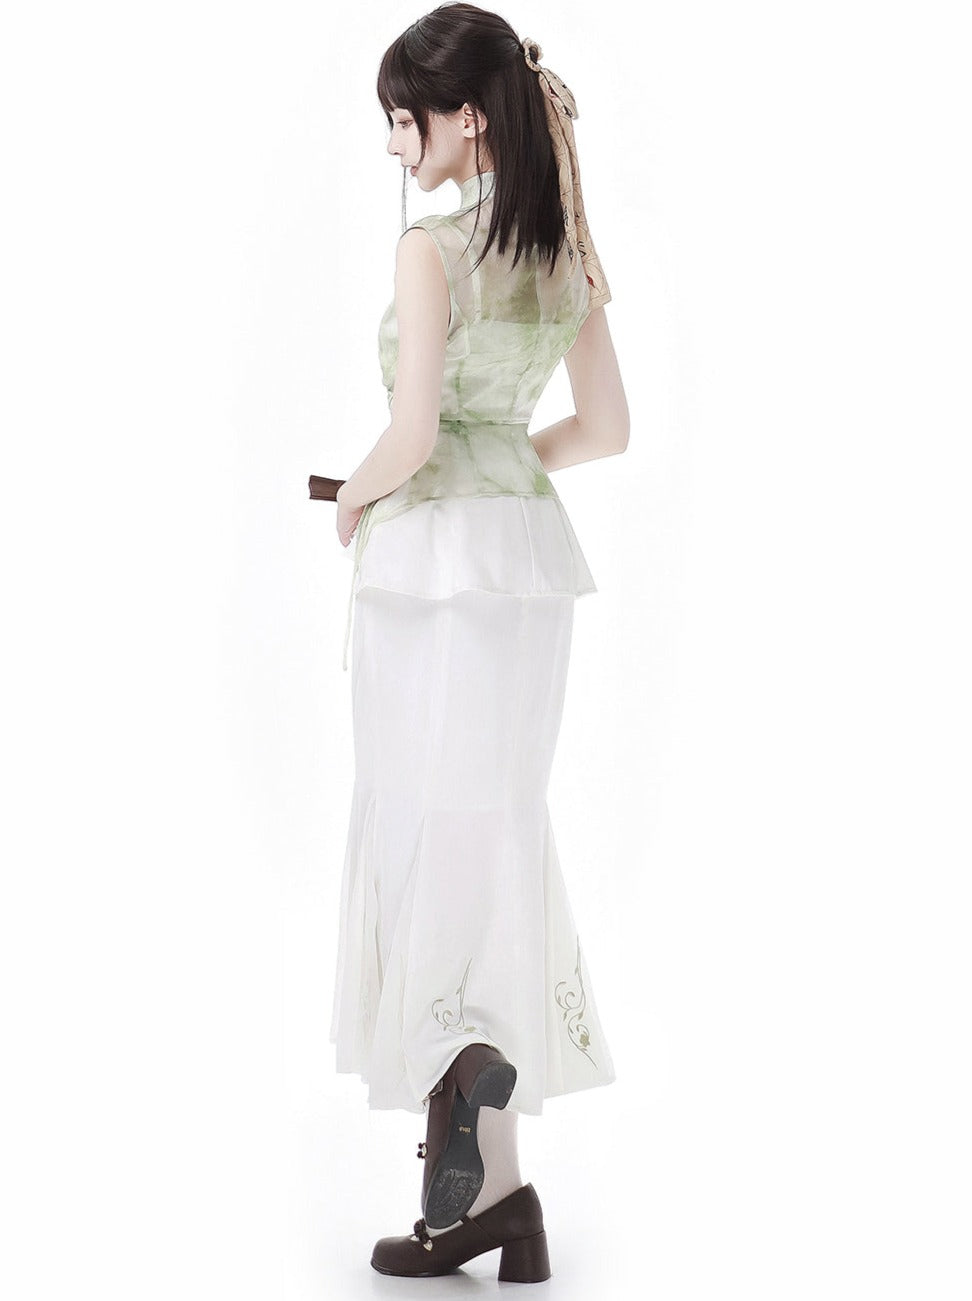 White Green Sleeveless Elegant Top + Camisole + Mermaid Skirt